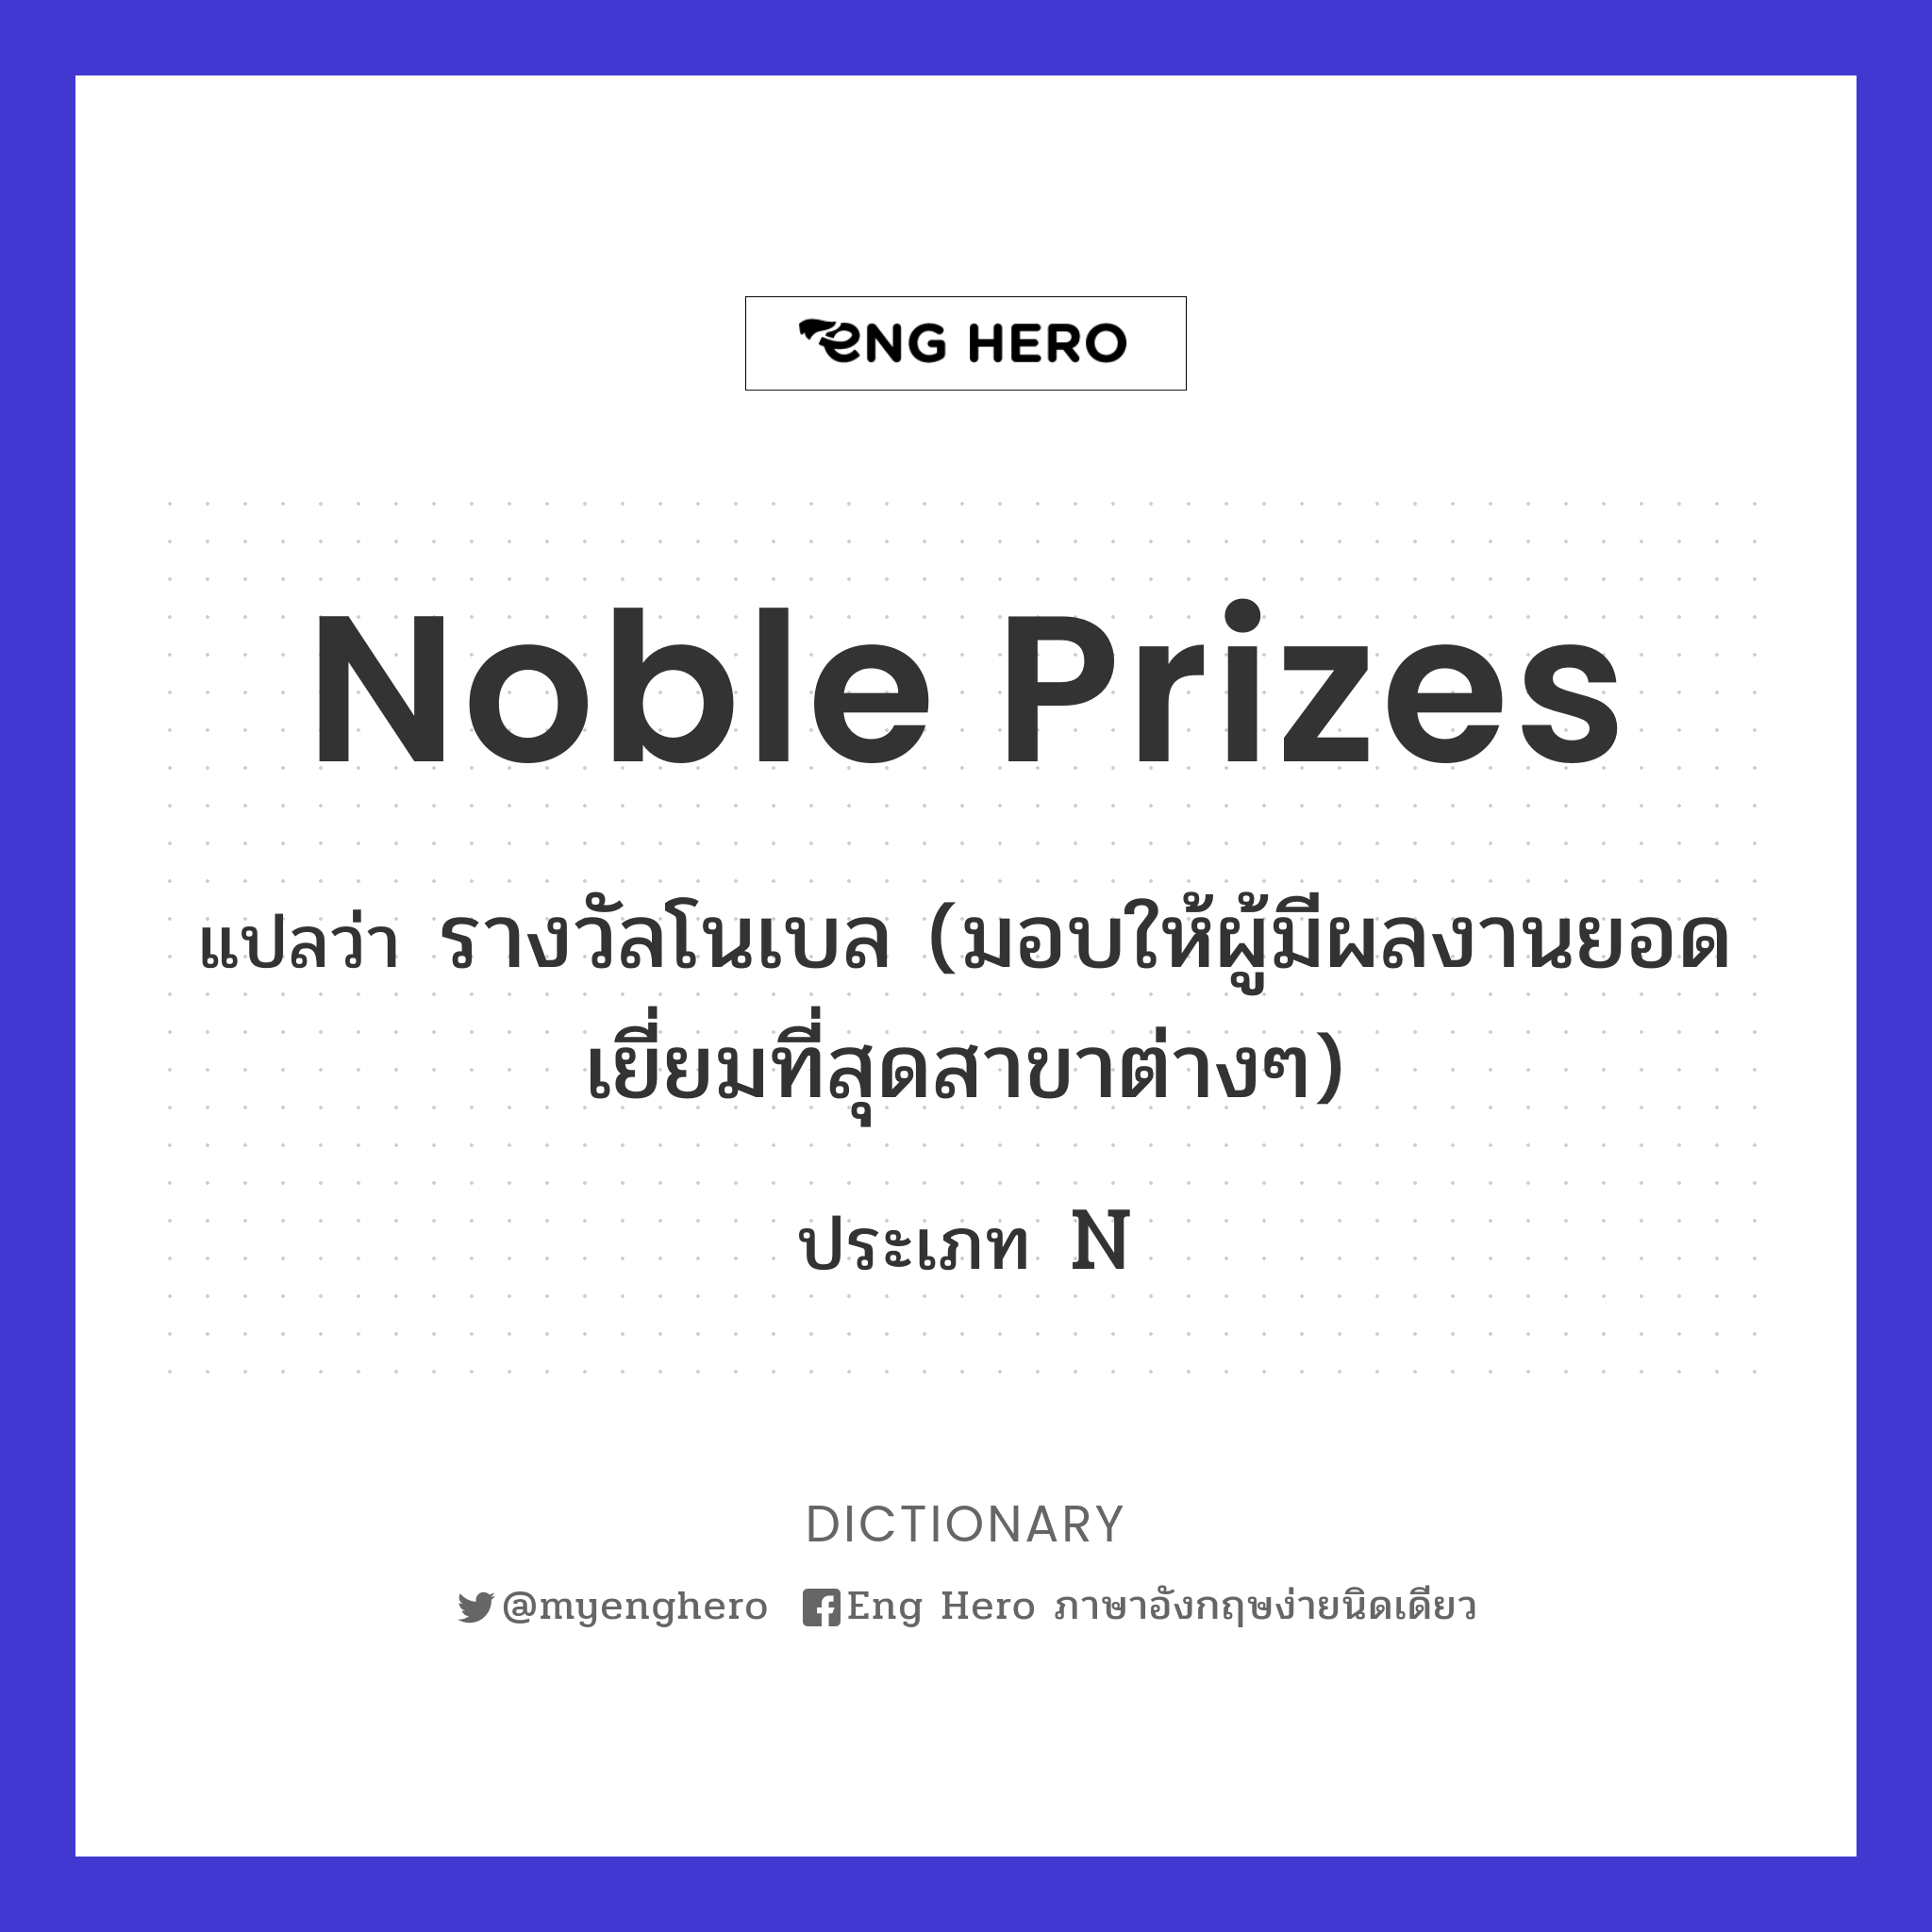 Noble prizes